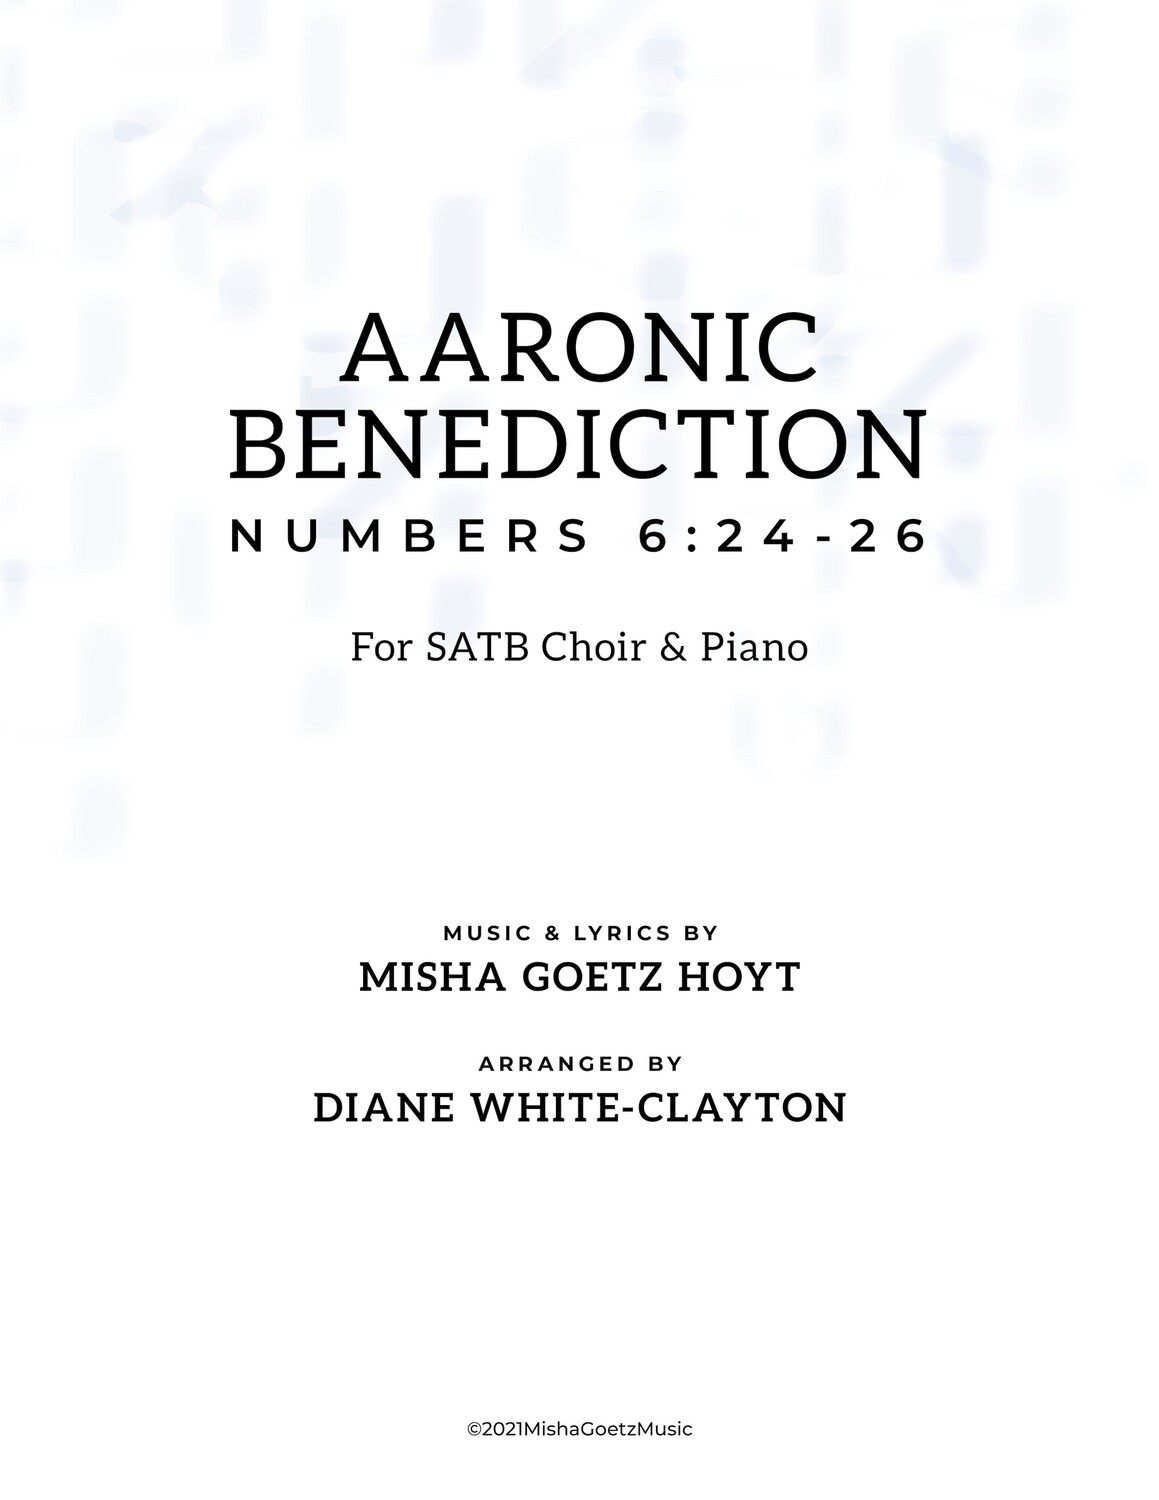 Aaronic Benediction (Choral Version) - Hard Copy Sheet Music Ships Separately